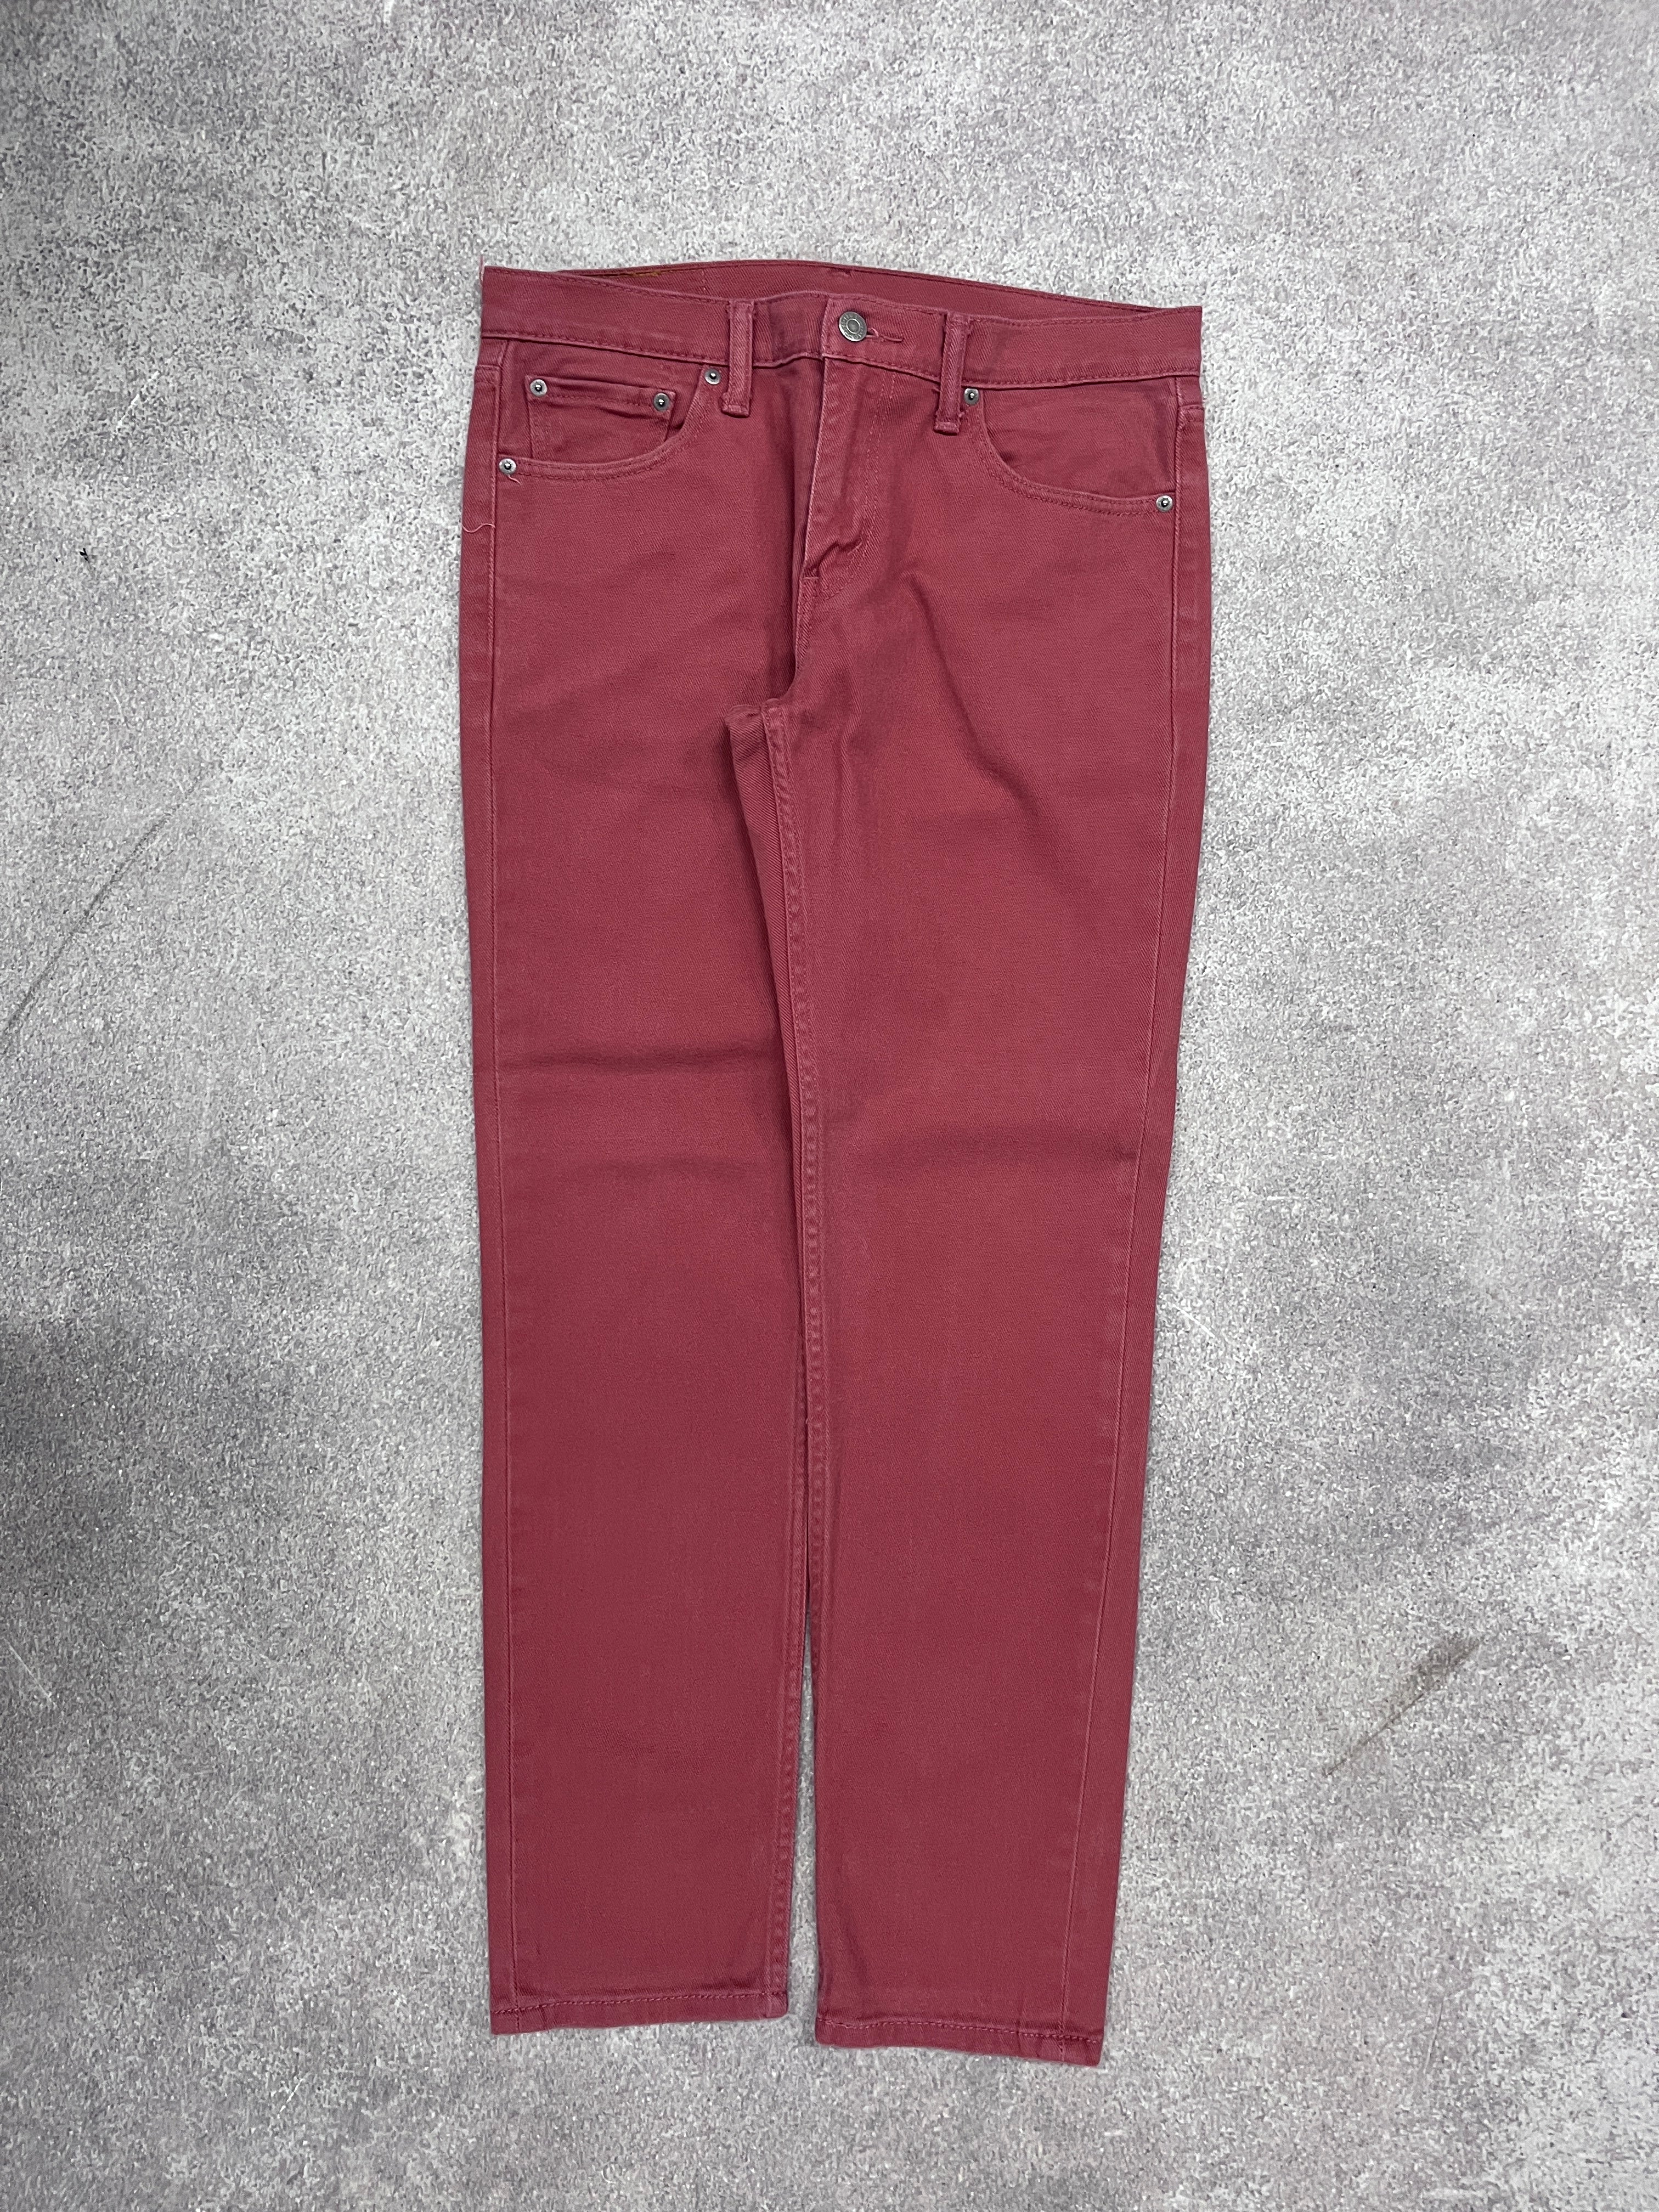 Vintage Levi 511 Denim Jeans Red // W30 L30 - RHAGHOUSE VINTAGE